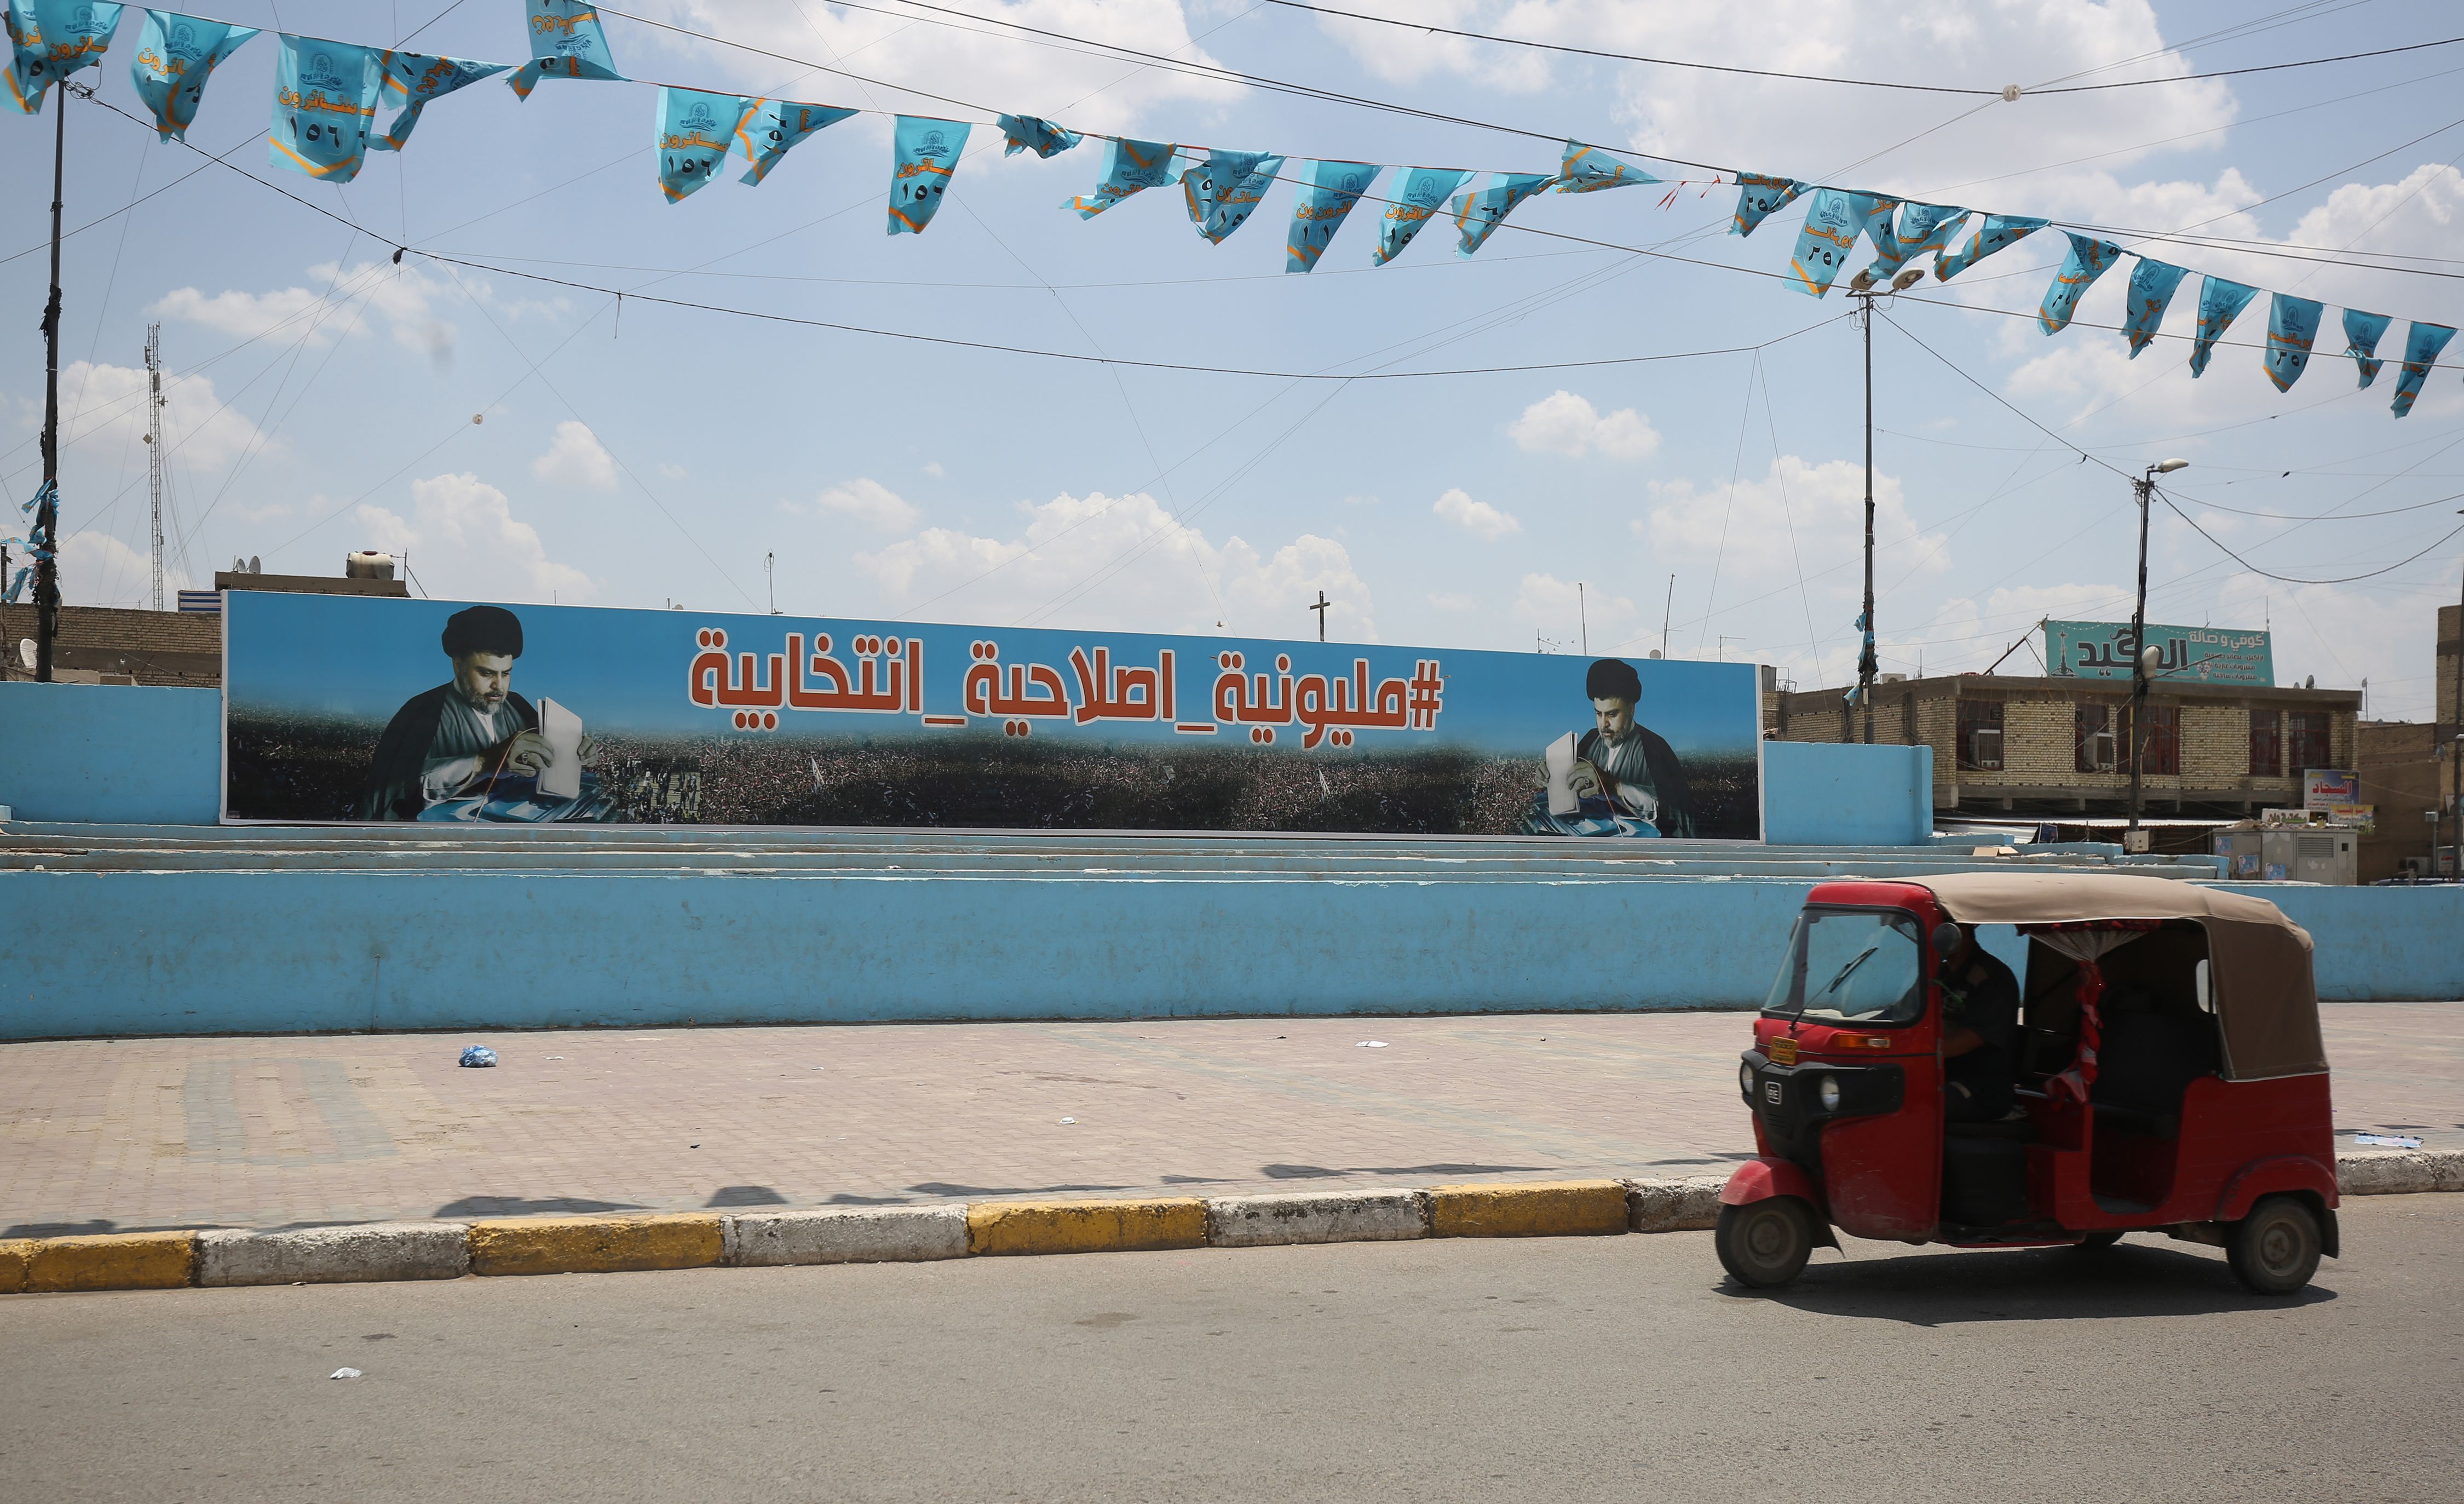 iraq-vote-muqtada-poster